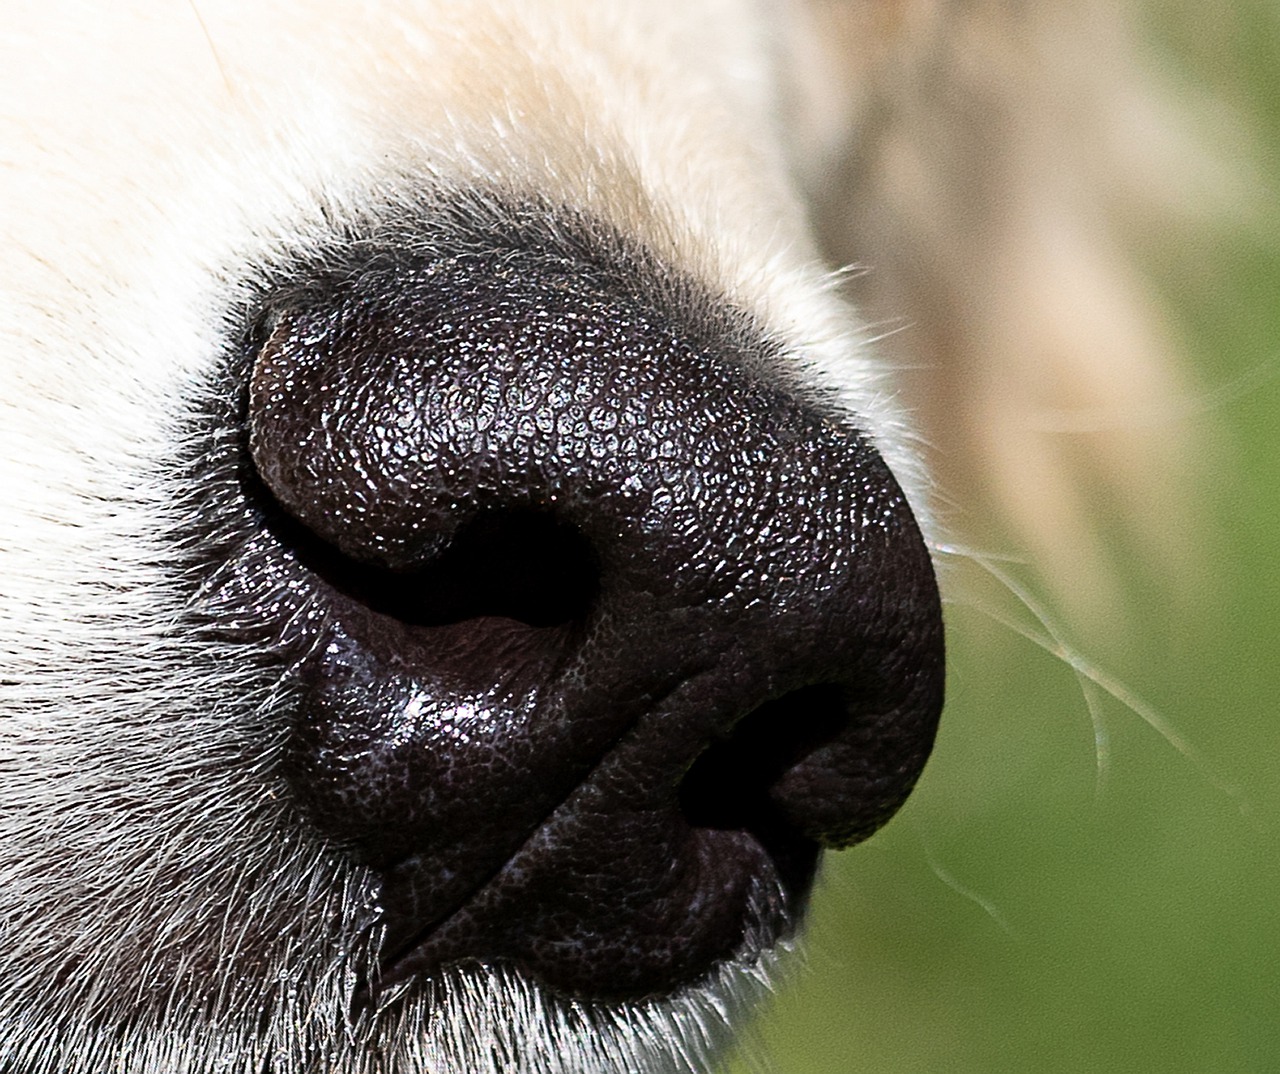 dog, nose, dog's nose